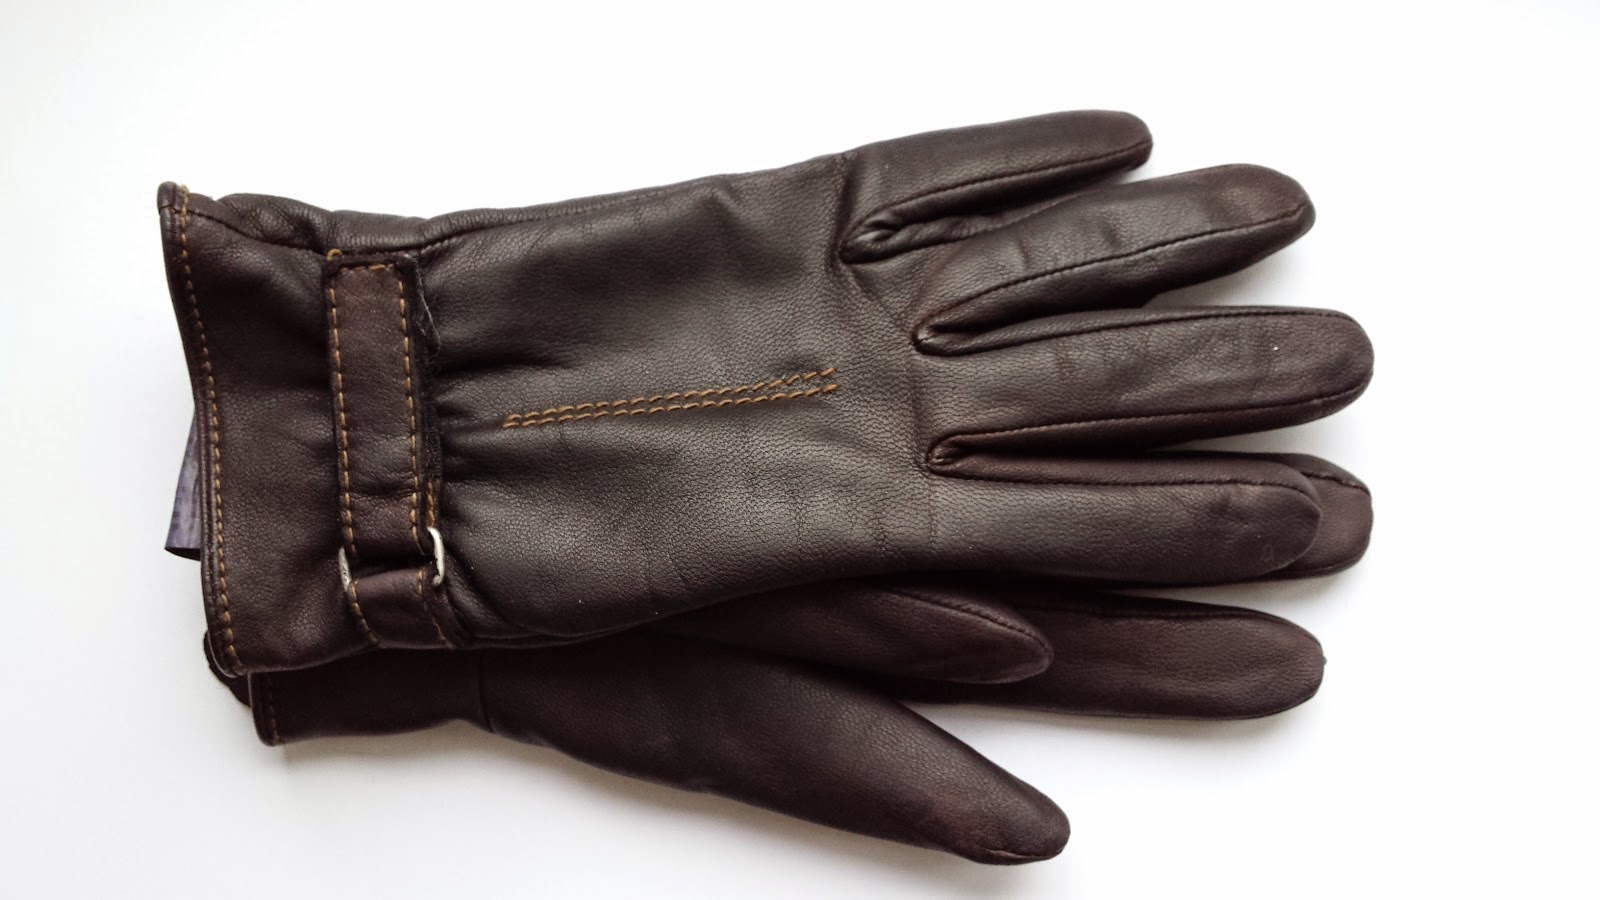 http://portialawrie.blogspot.co.uk/2014/12/diy-dyed-leather-gloves-inc-diy-leather.html